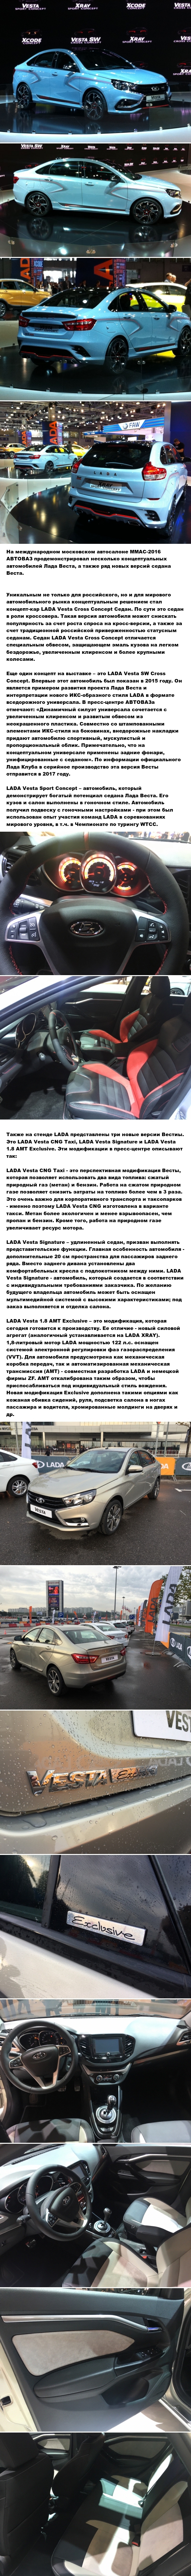 CONCEPTS AND NEW VERSIONS OF LADA VESTA AT MIAS-2016. A PHOTO. (Link to news in comments) - AvtoVAZ, Mmas, Lada, Concept, Lada Vesta, Longpost